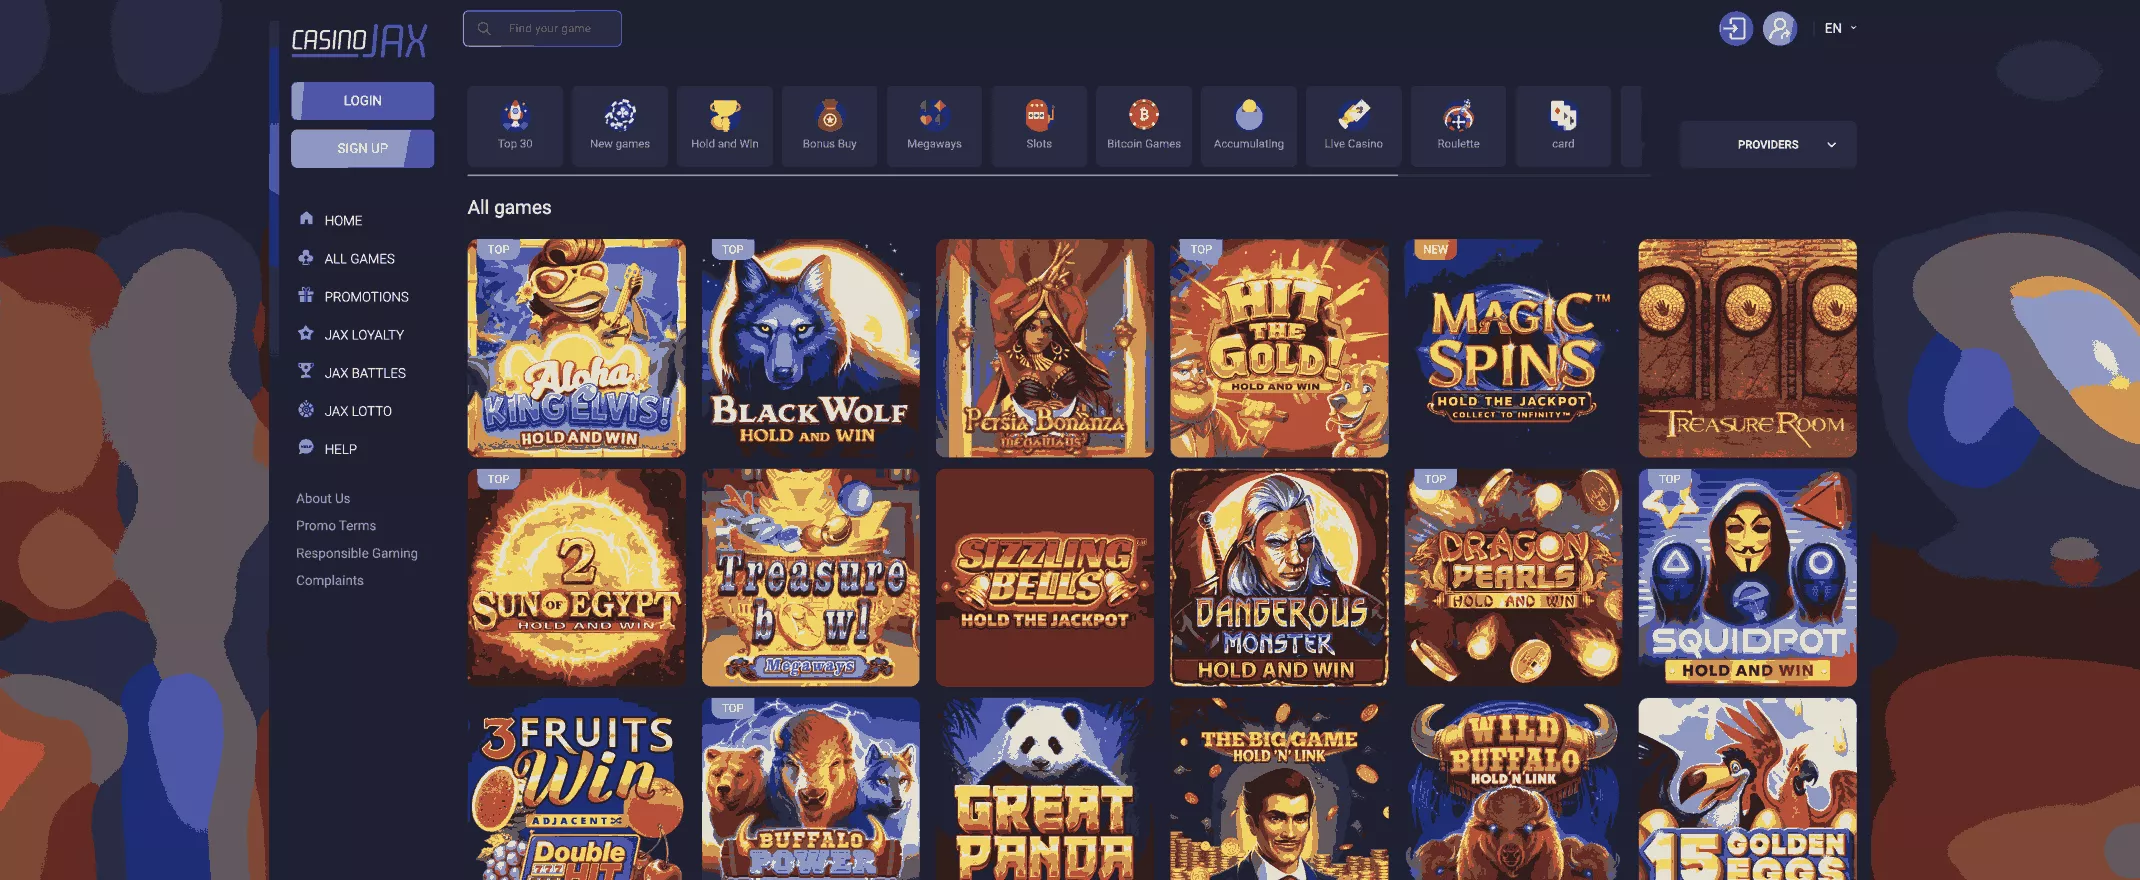 casinojax games screenshot